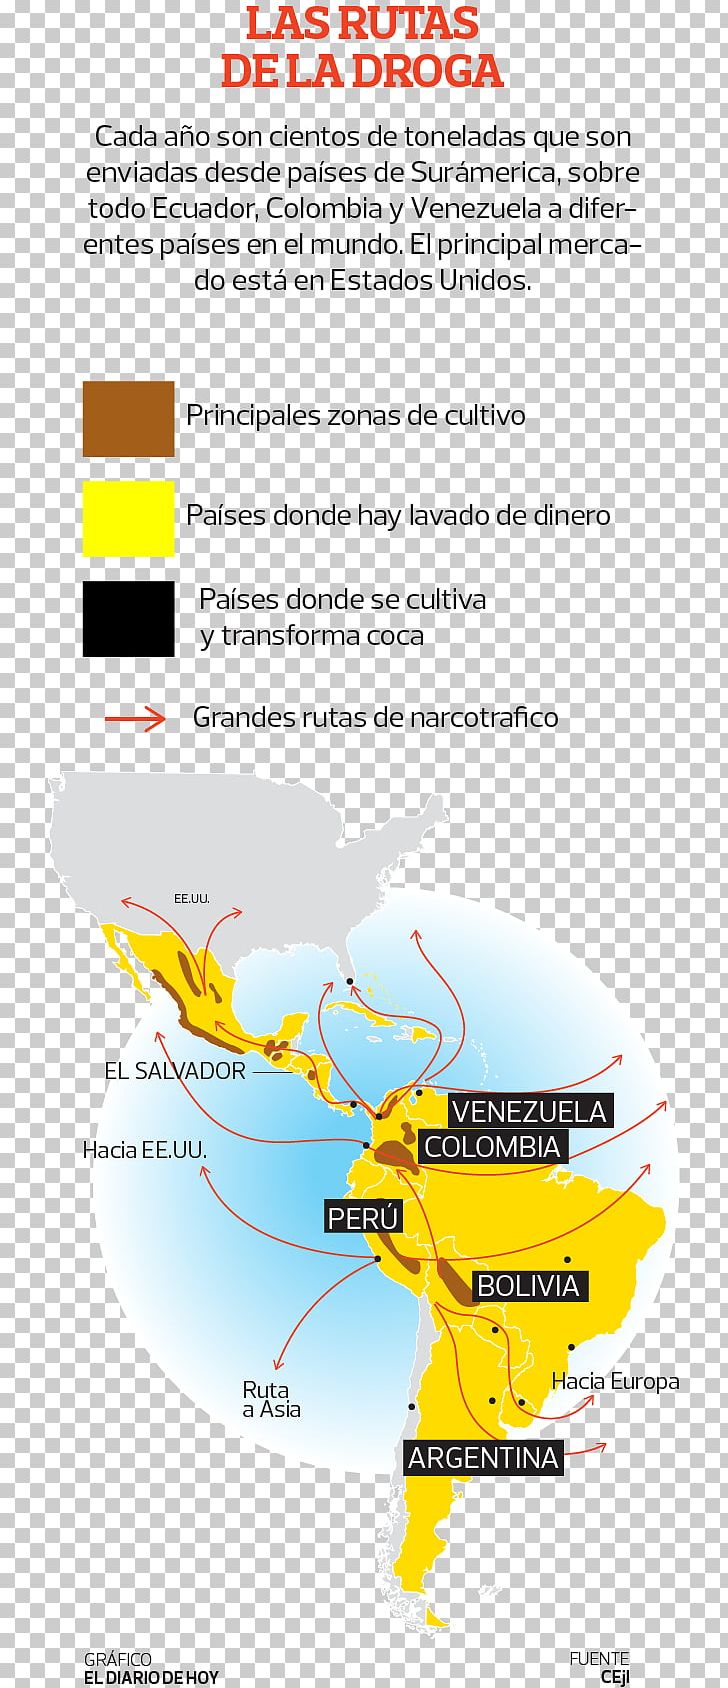 El Salvador Money Laundering Illegal Drug Trade United States PNG, Clipart, Area, Country, Diagram, Drug, El Salvador Free PNG Download